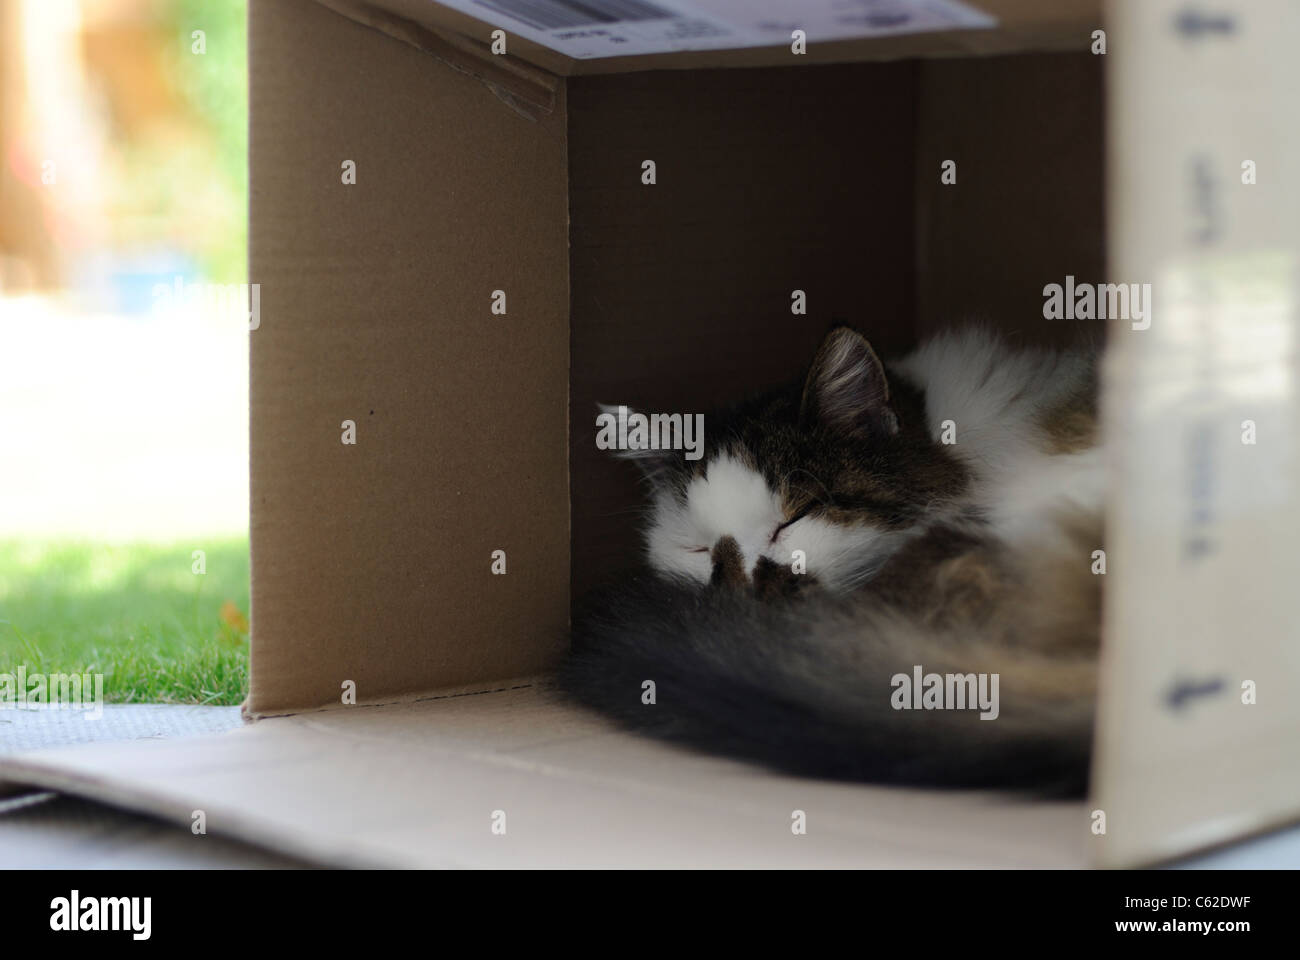 A cat sleeping in a cardboard box outdoors in a garden. Stock Photo